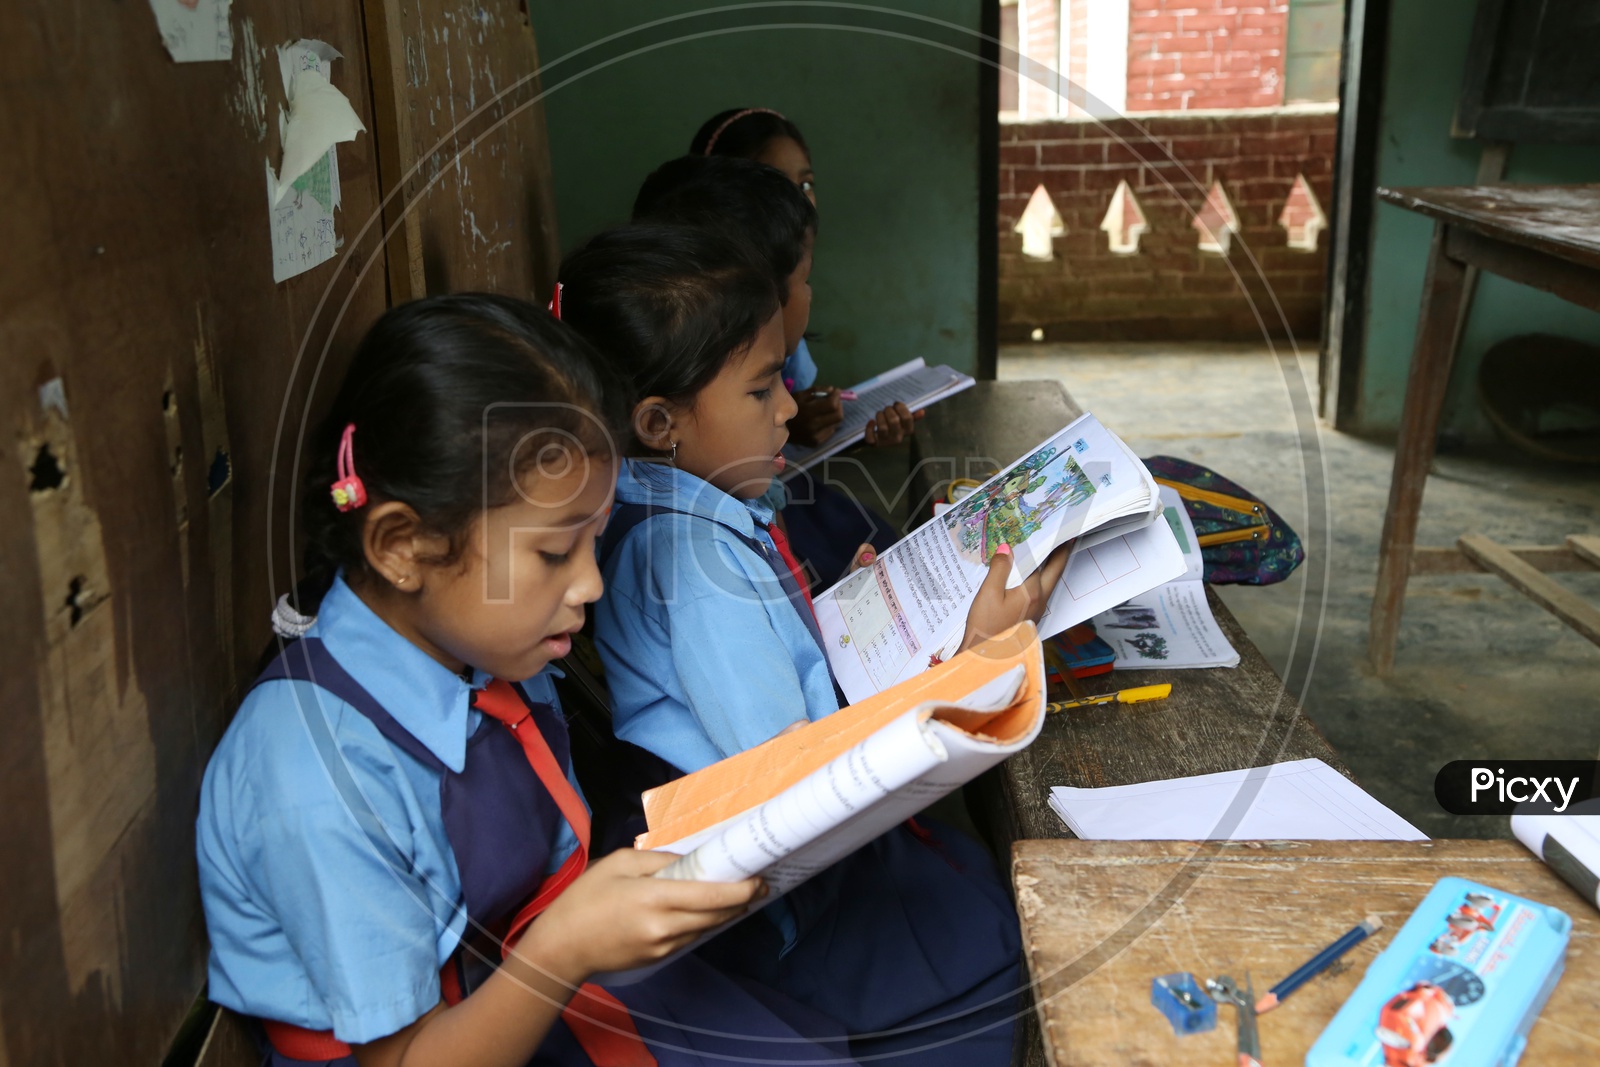 School Children  or School Students In a Classroom Wearing  School Uniforms With Books  in a Rural Village School